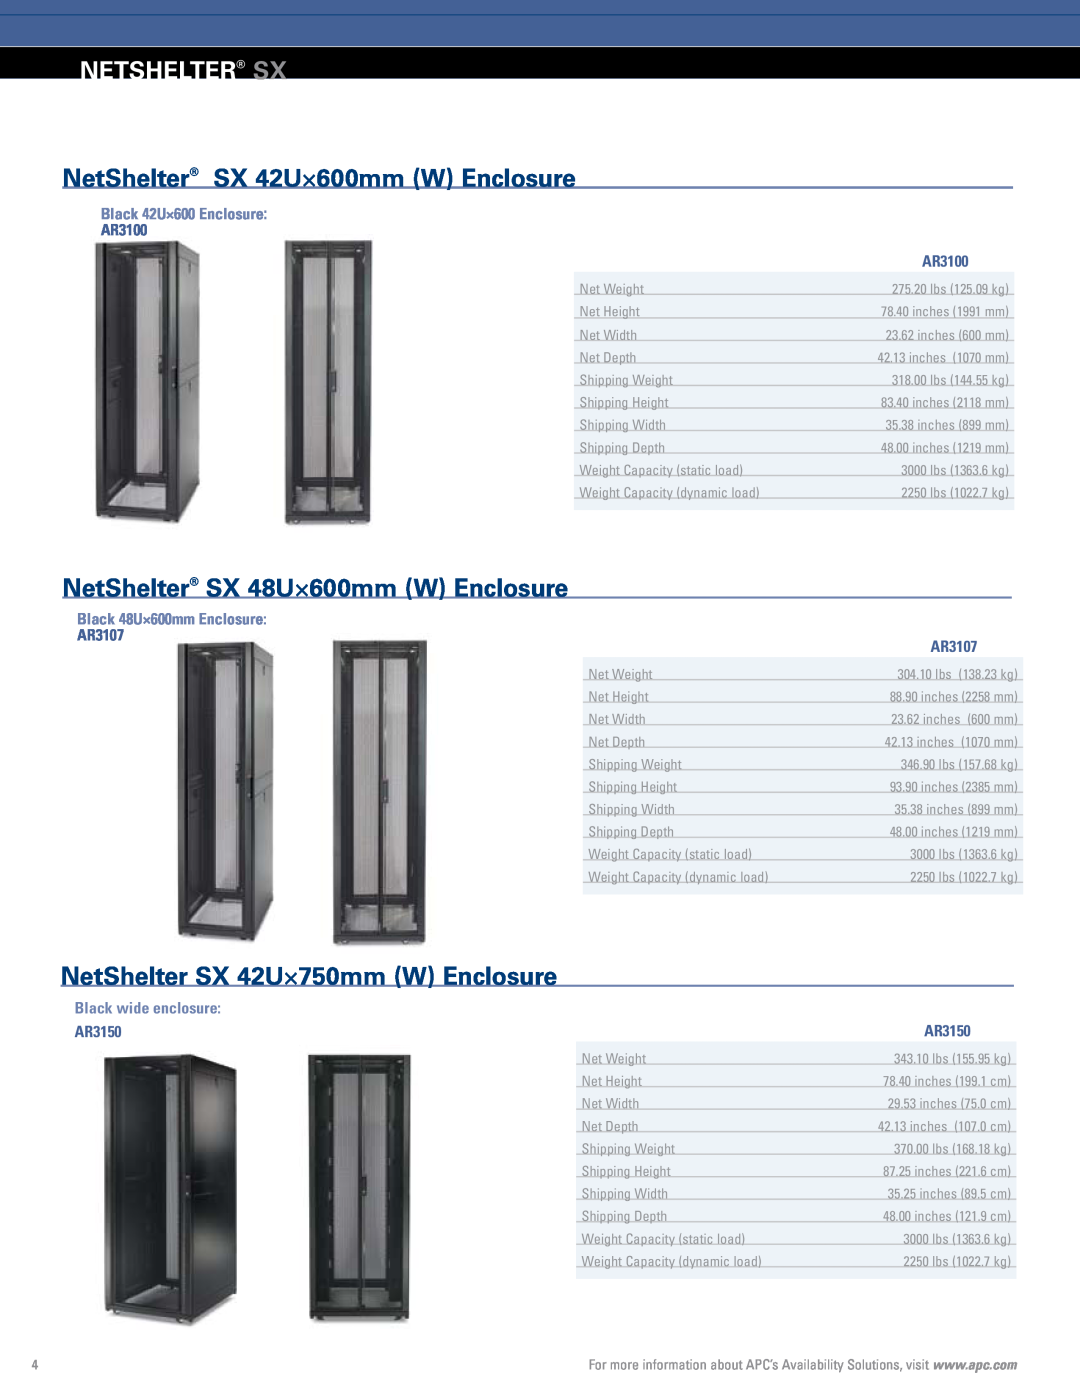 APC Rack Systems NetShelter SX 42U×600mm W Enclosure, NetShelter SX 48U×600mm W Enclosure, Black 42U×600 Enclosure, AR3100 